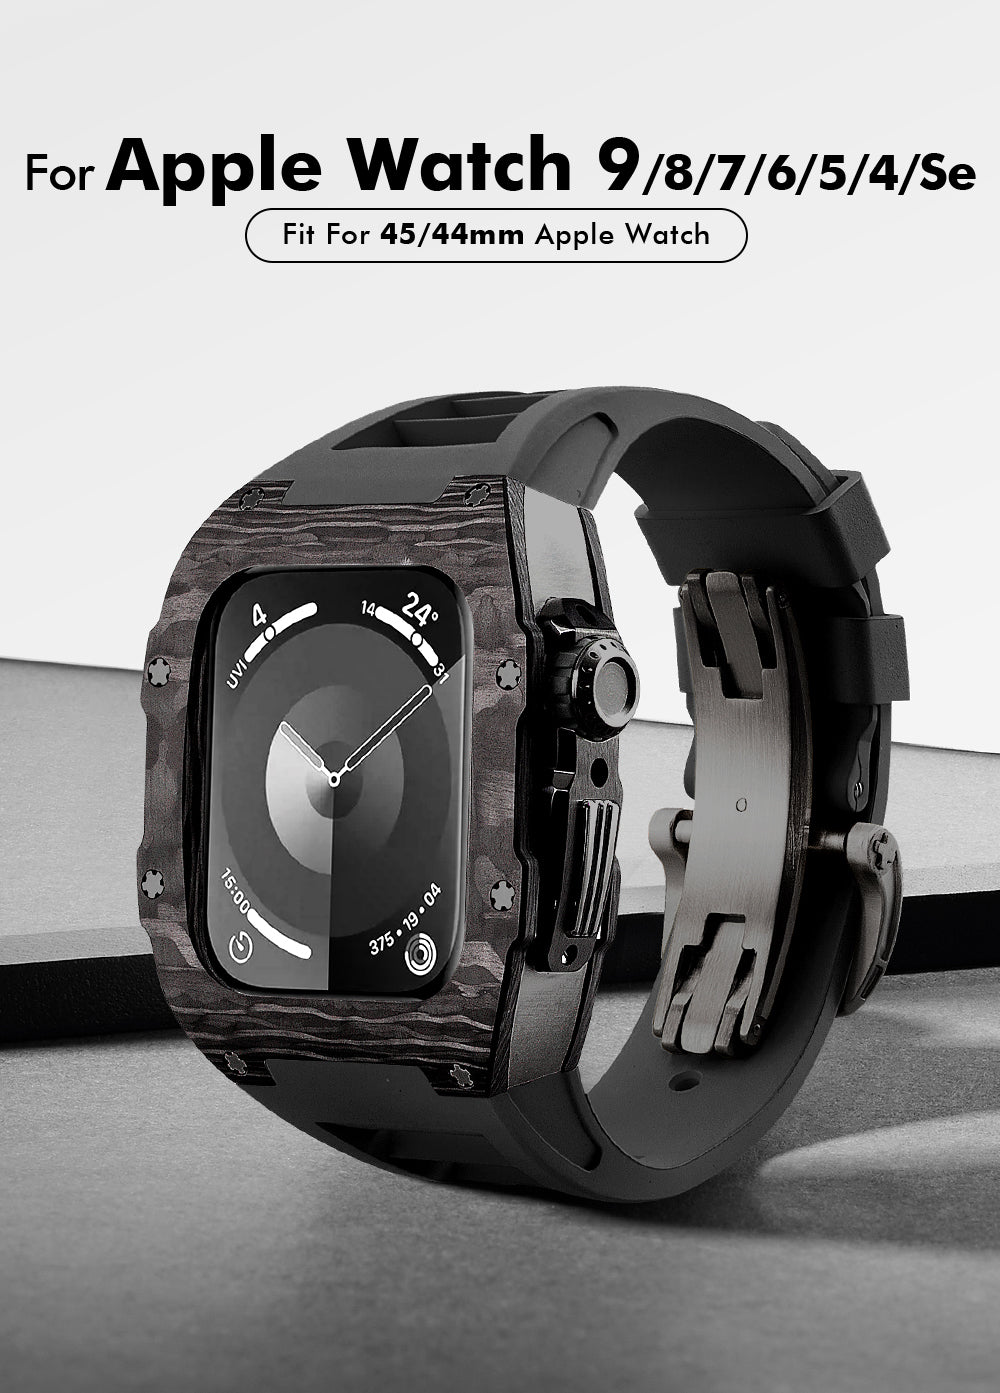 Apple Watch Case 44mm - Carbon Fiber Ti Black Case + Blue Fluoro Strap (8 Screws)